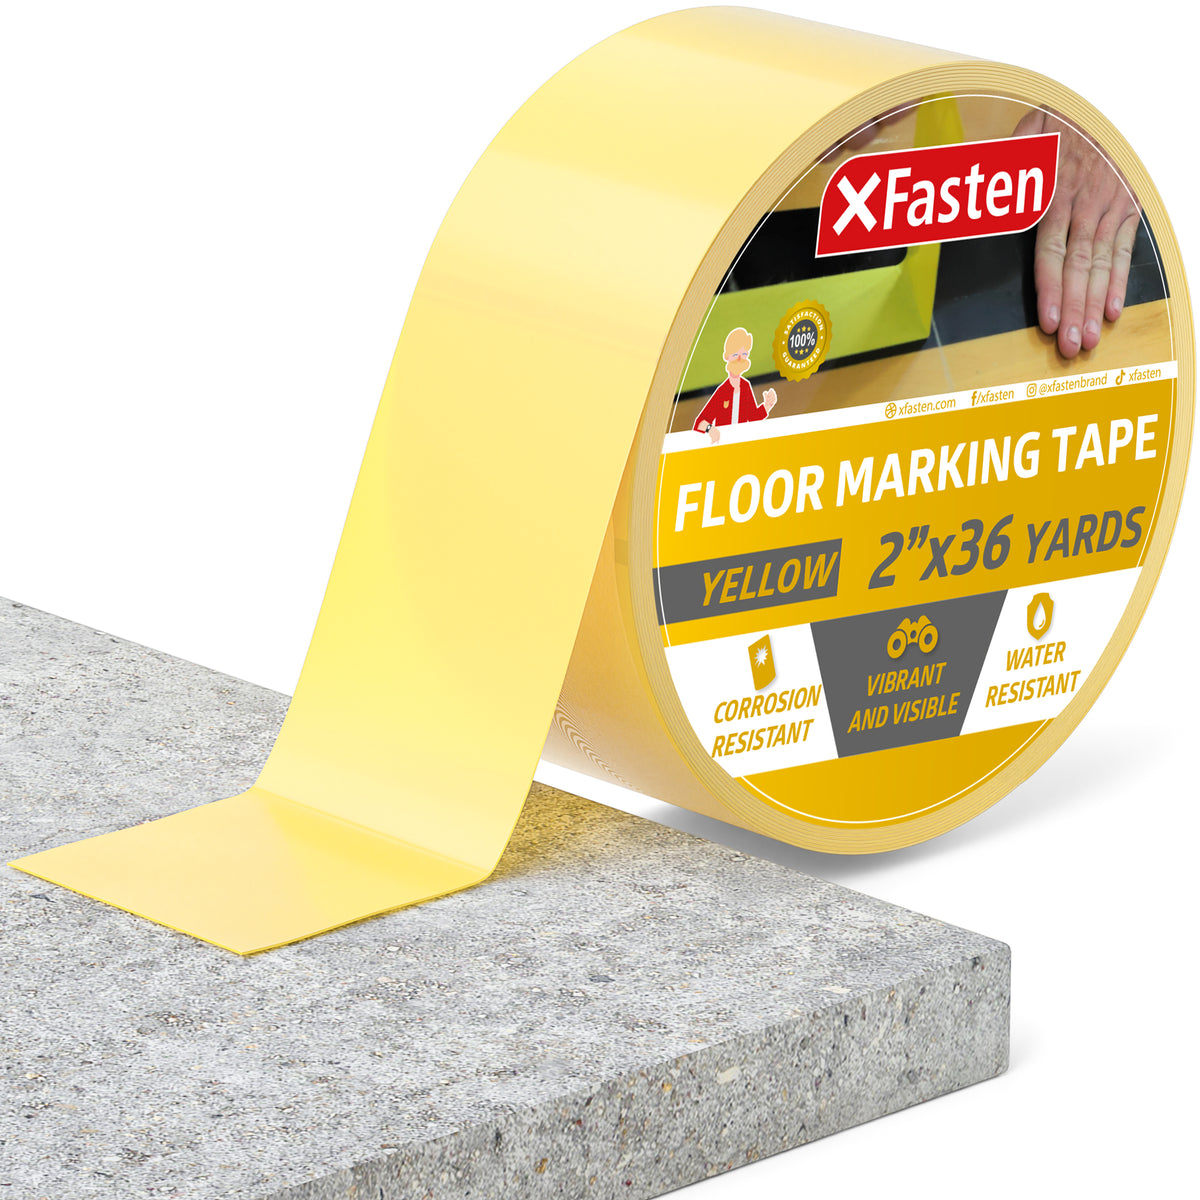 XFasten Floor Marking Vinyl Tape, Yellow, 2 Inches x 36 Yards 6 Mils T